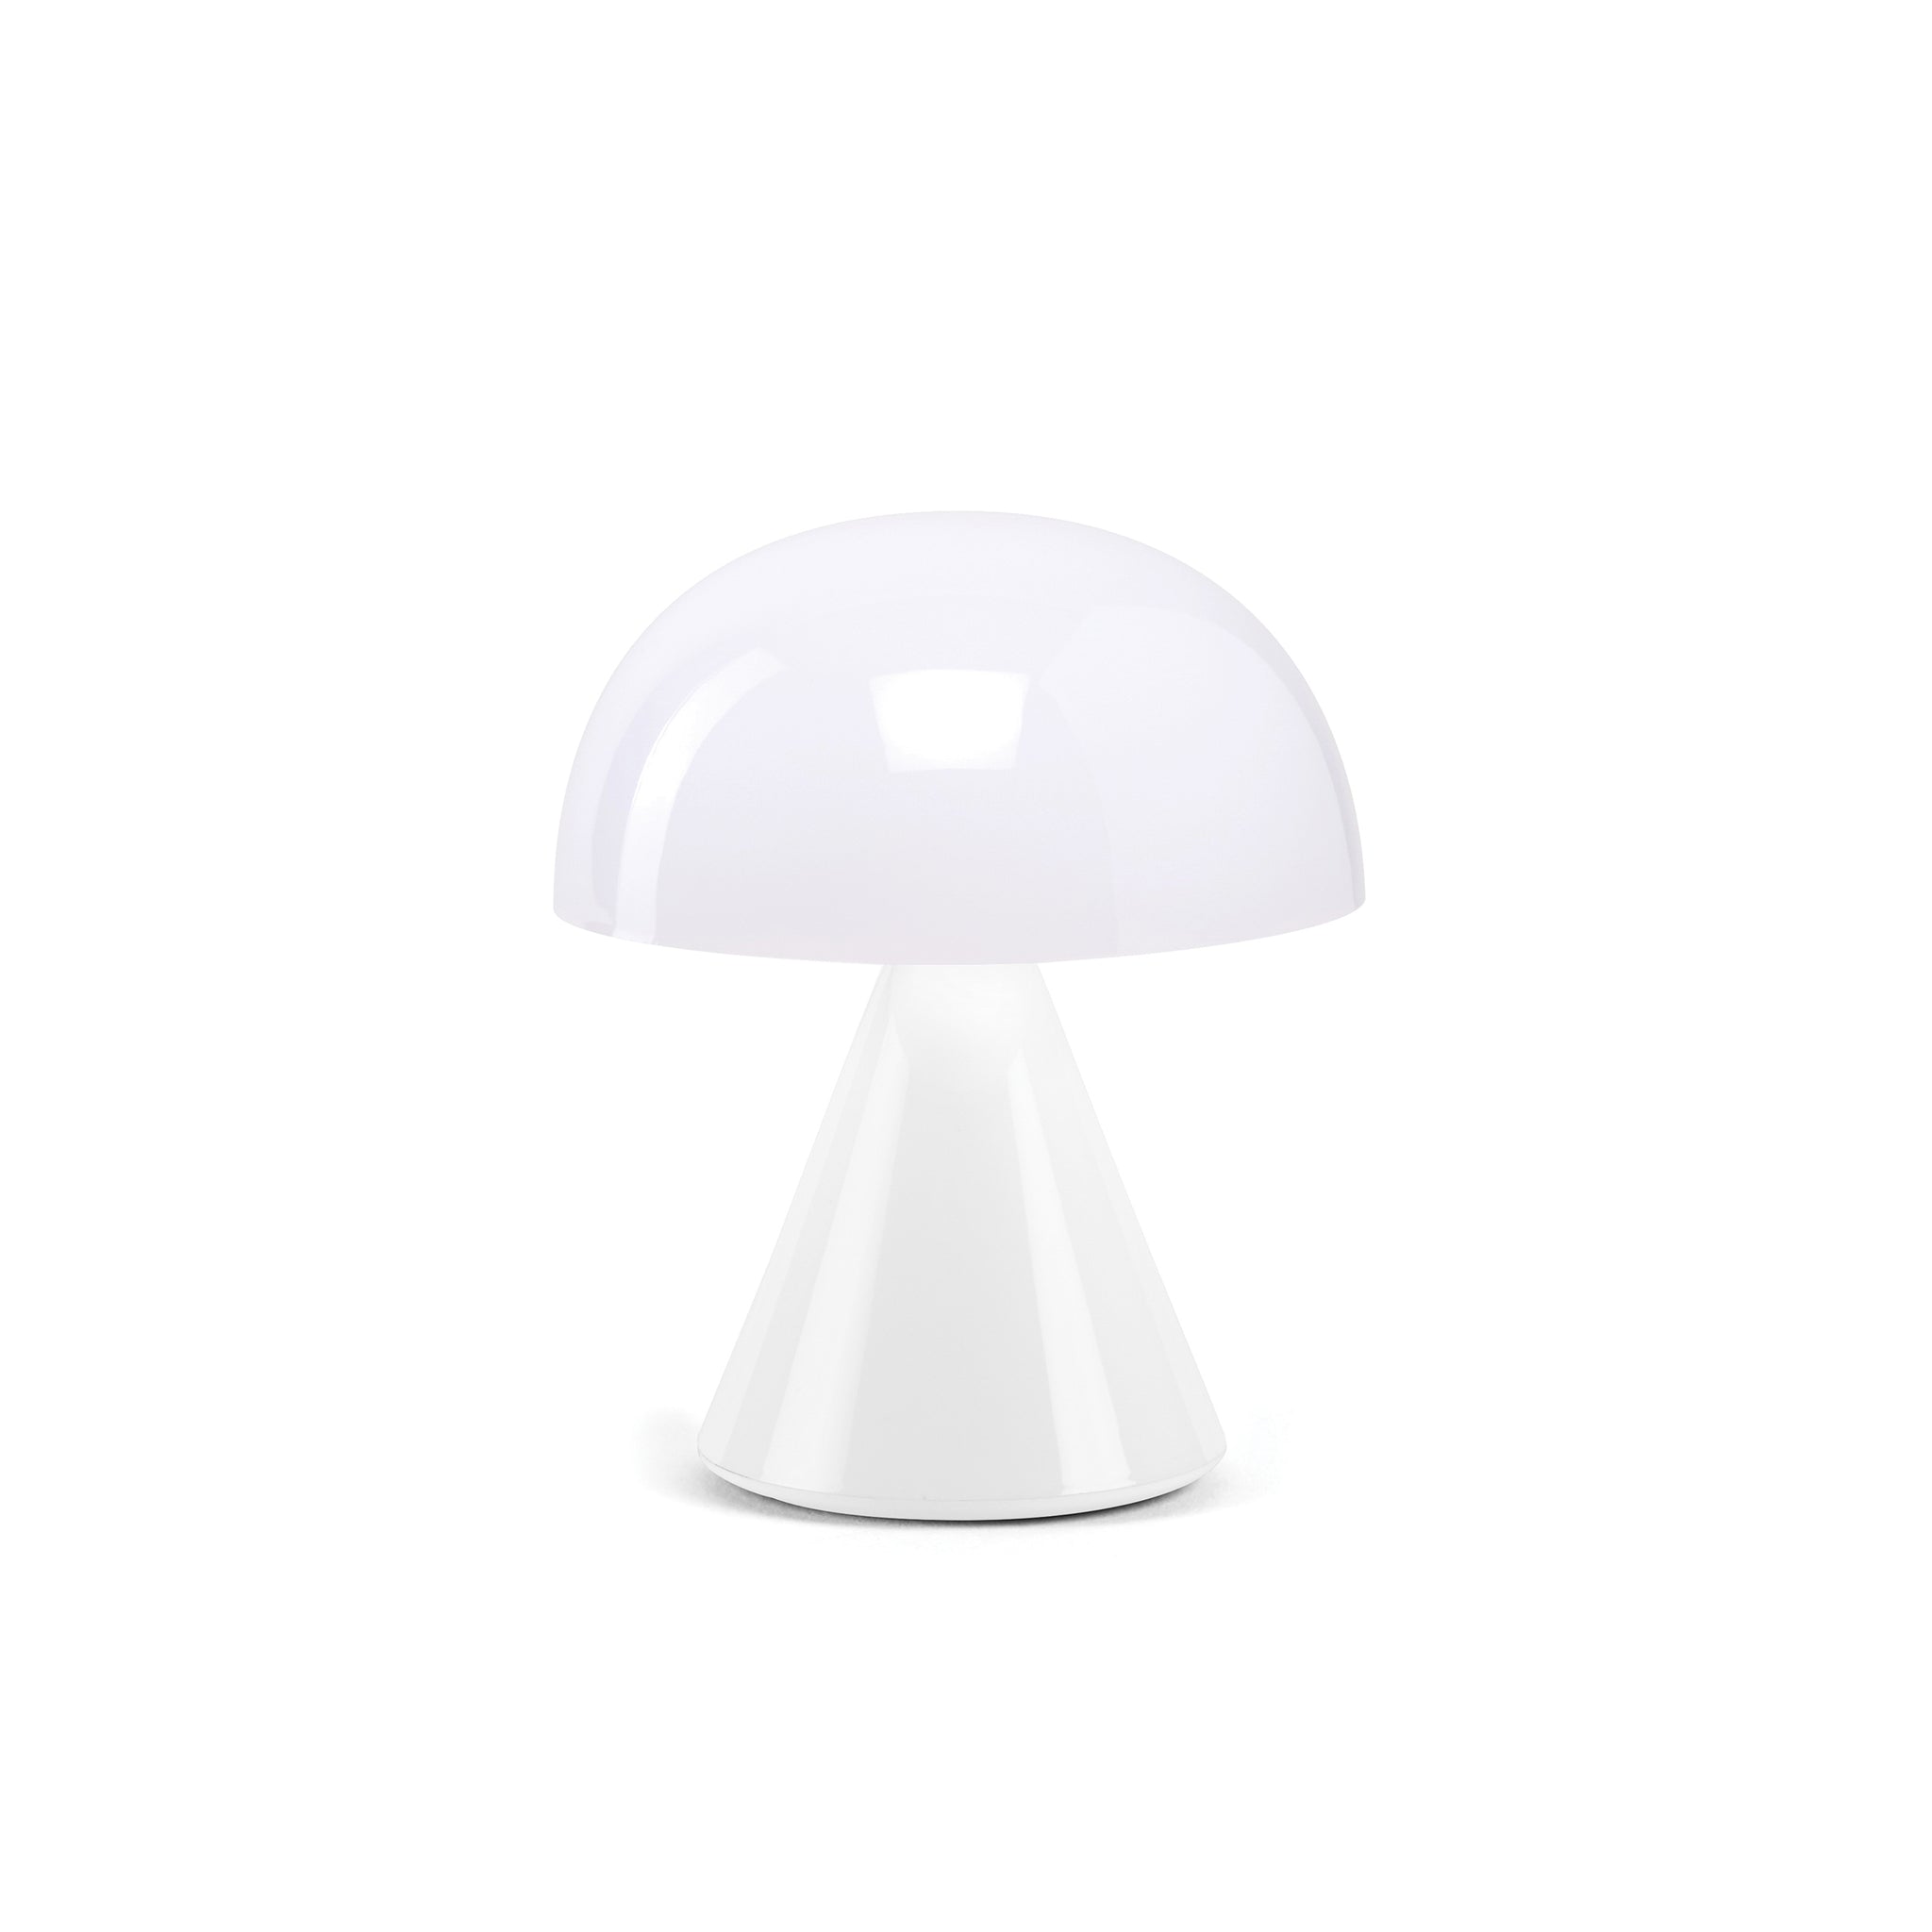 Lexon Mina Small│Oplaadbare LED lamp Glossy White│art. LH60WG│voorkant met verlichting uit